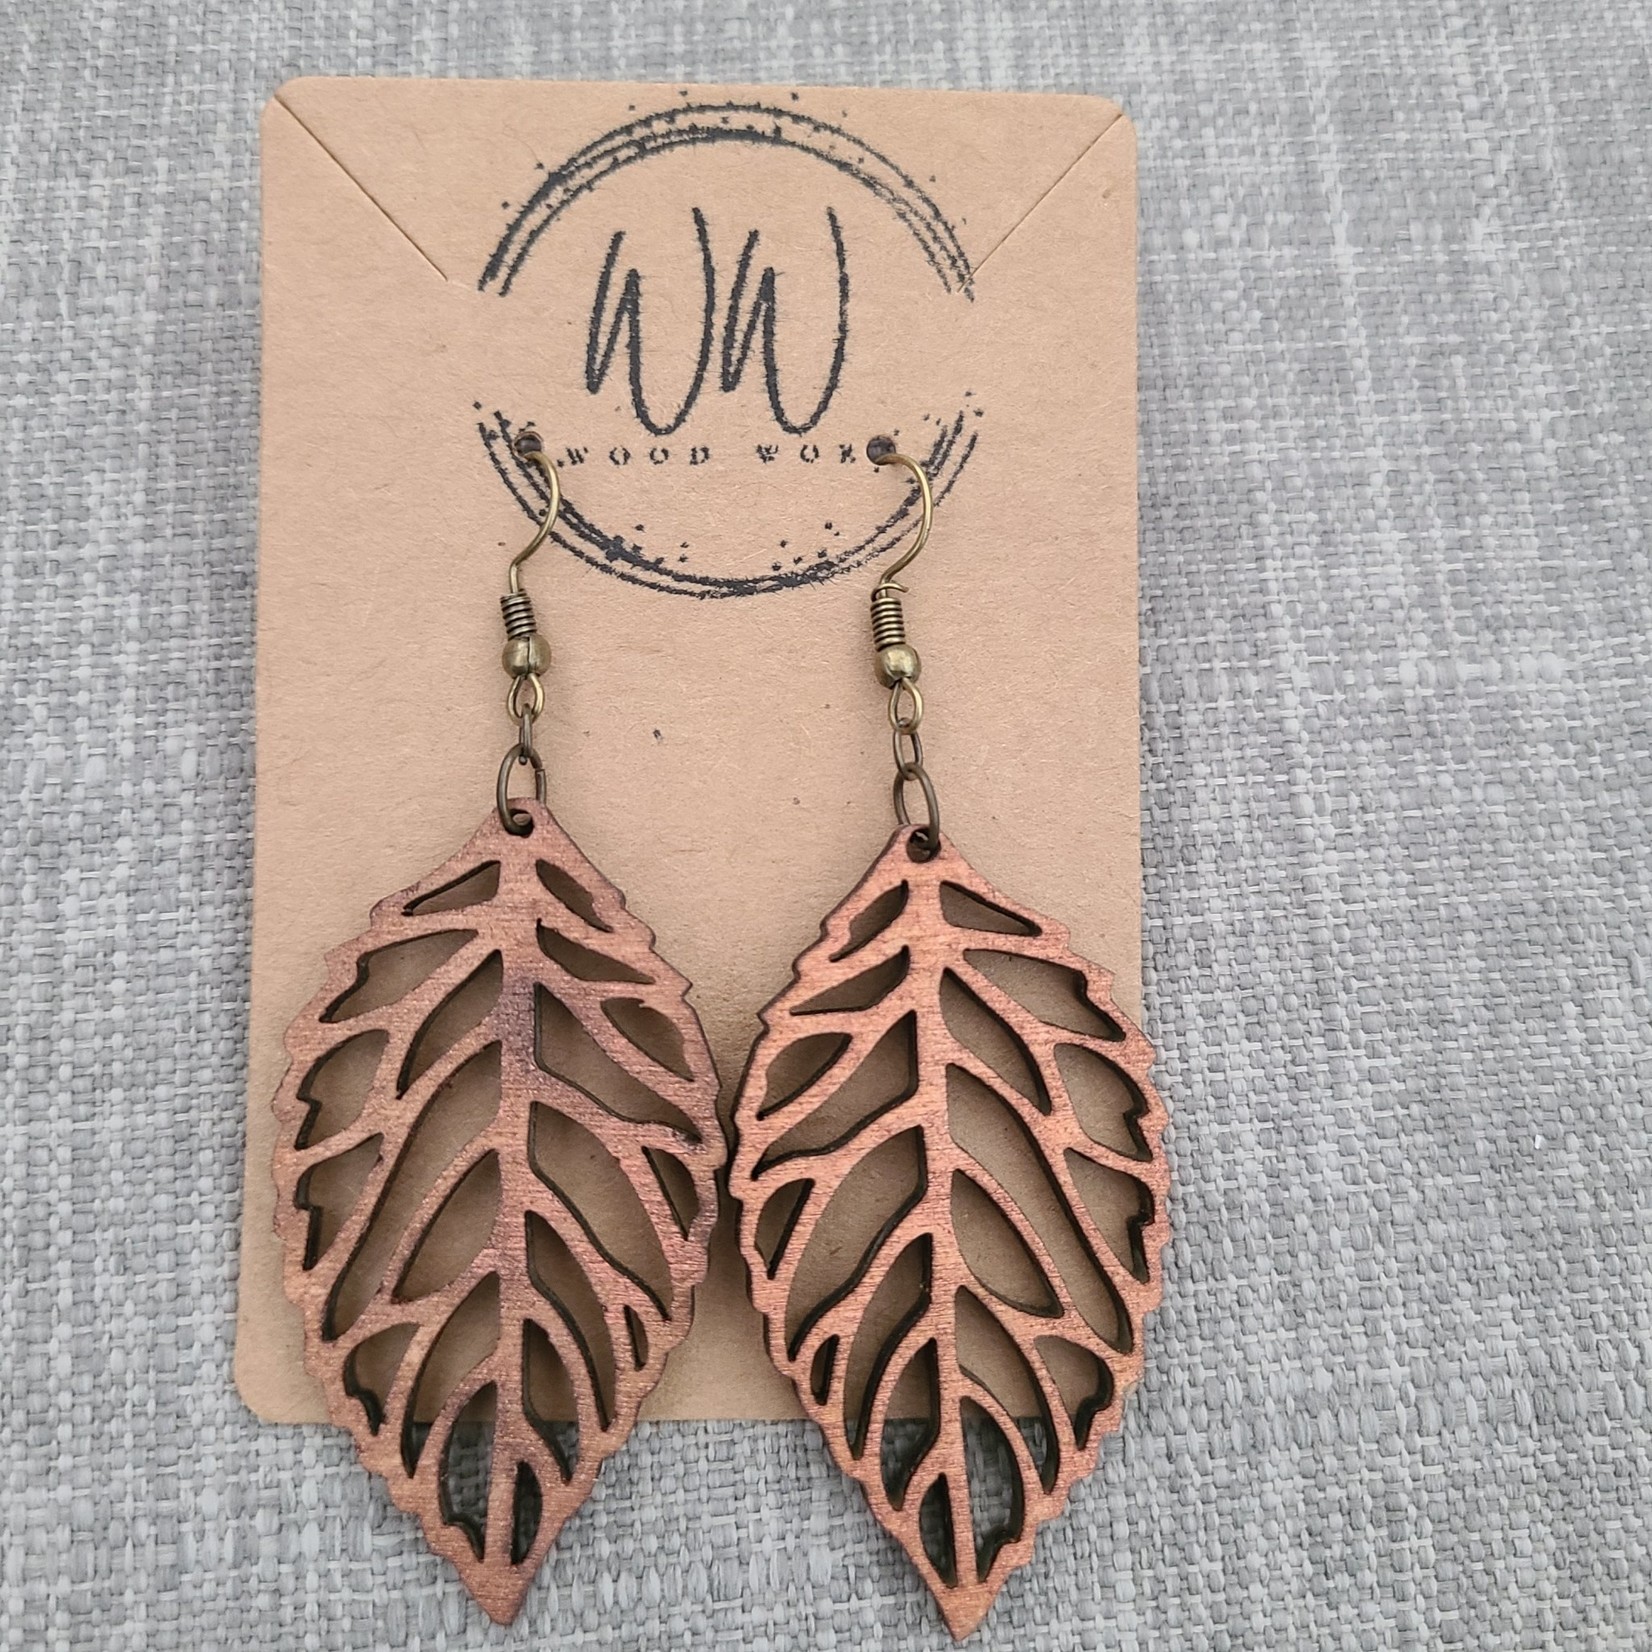 Wood WoRx Leaf Earrings